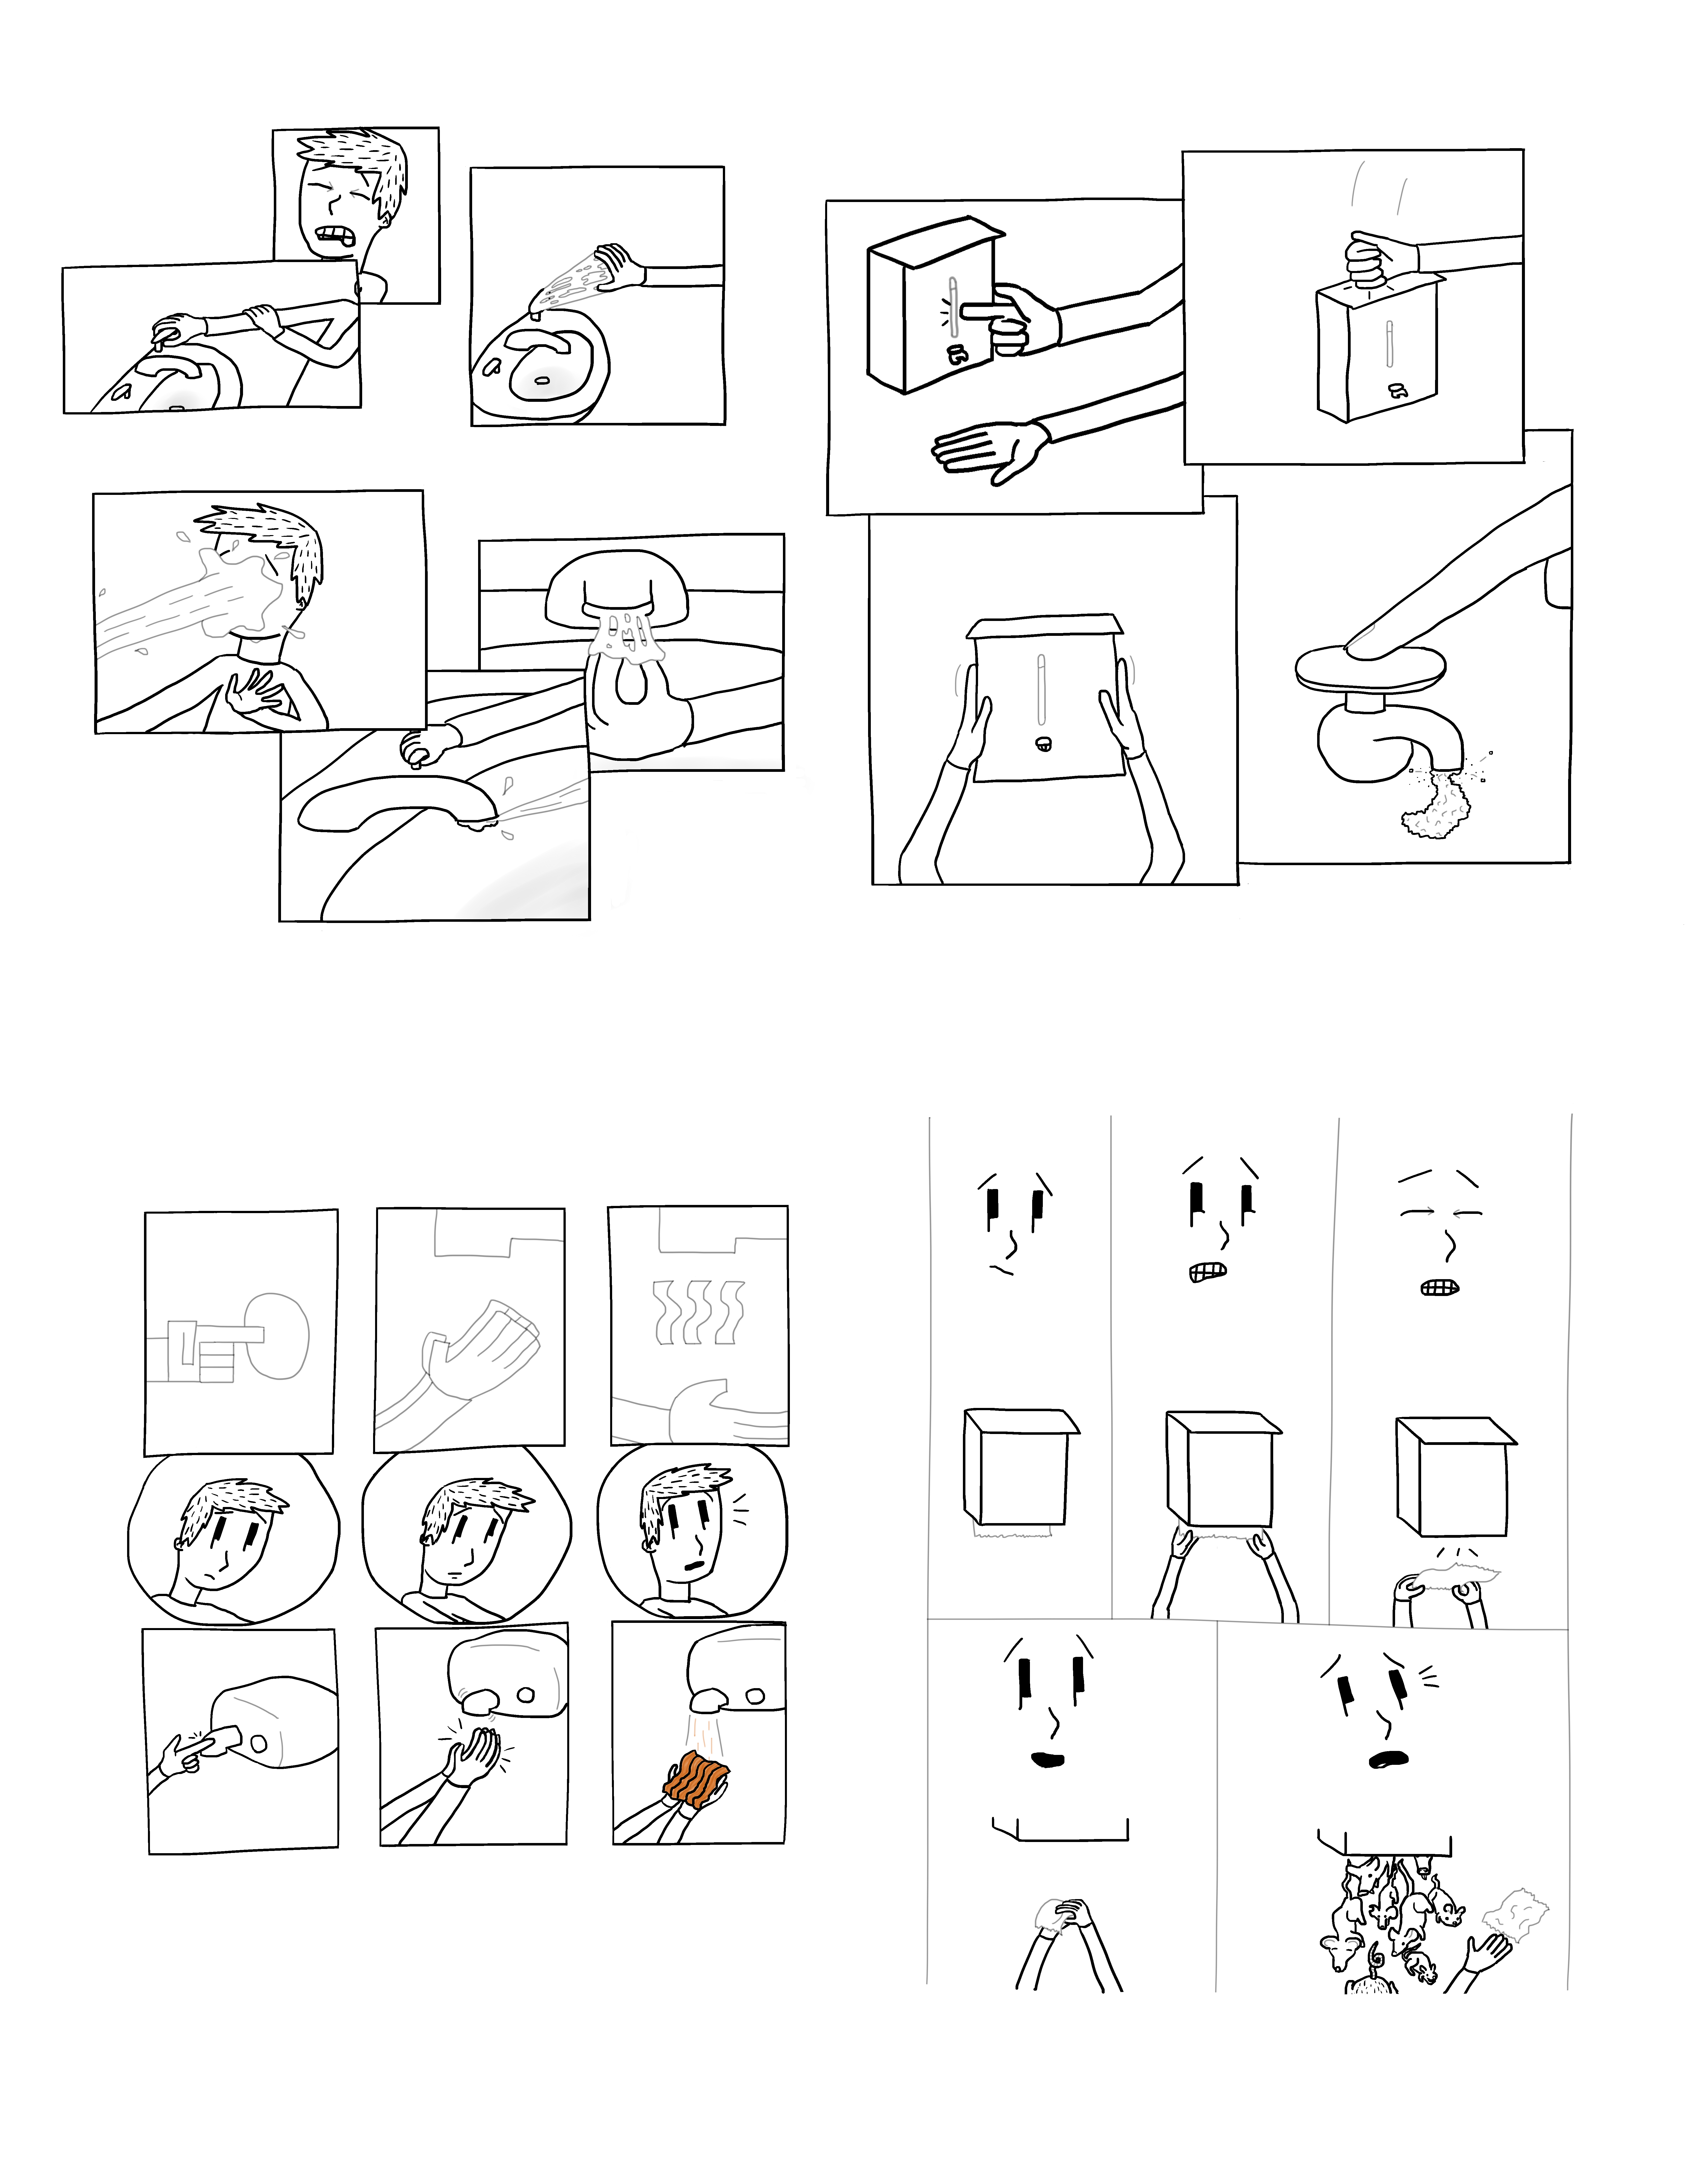 16 – Complicated bathroom